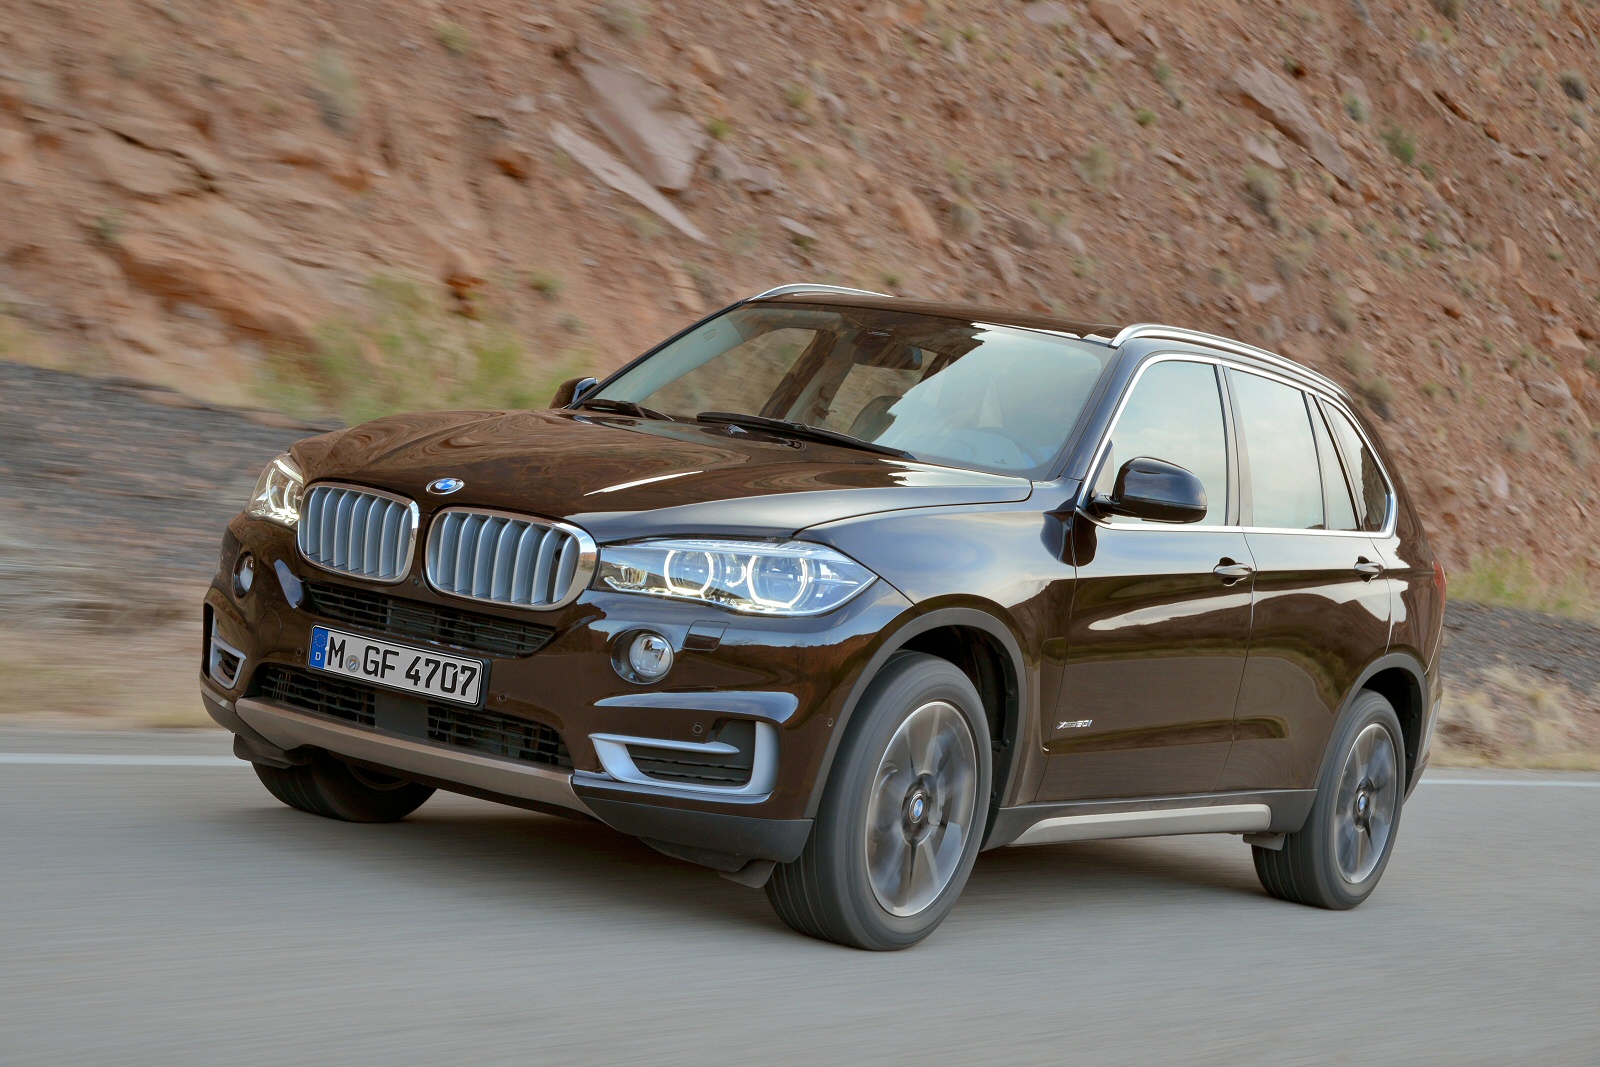 BMW X5 Diesel Estate: Review & Comparisons | OSV Car Reviews